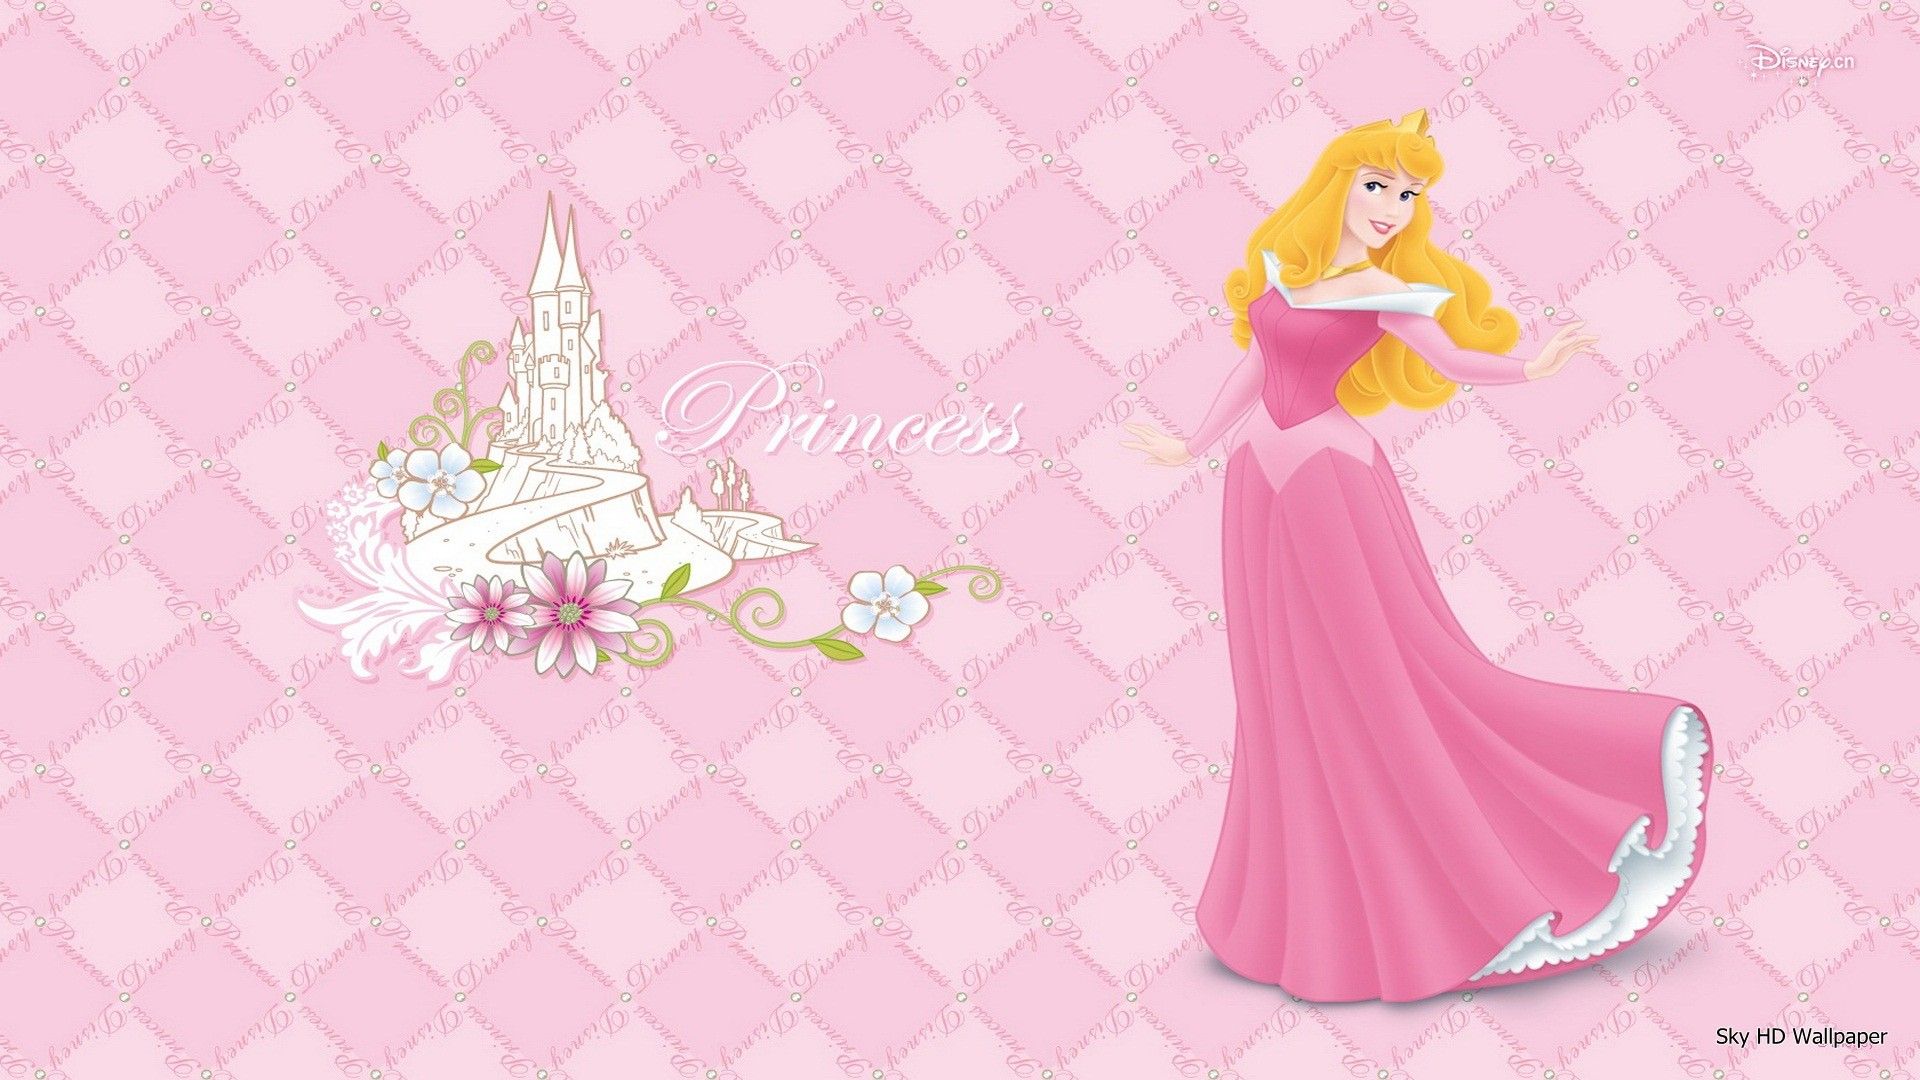 Cool Disney Princess Aurora Wallpaper HD picture